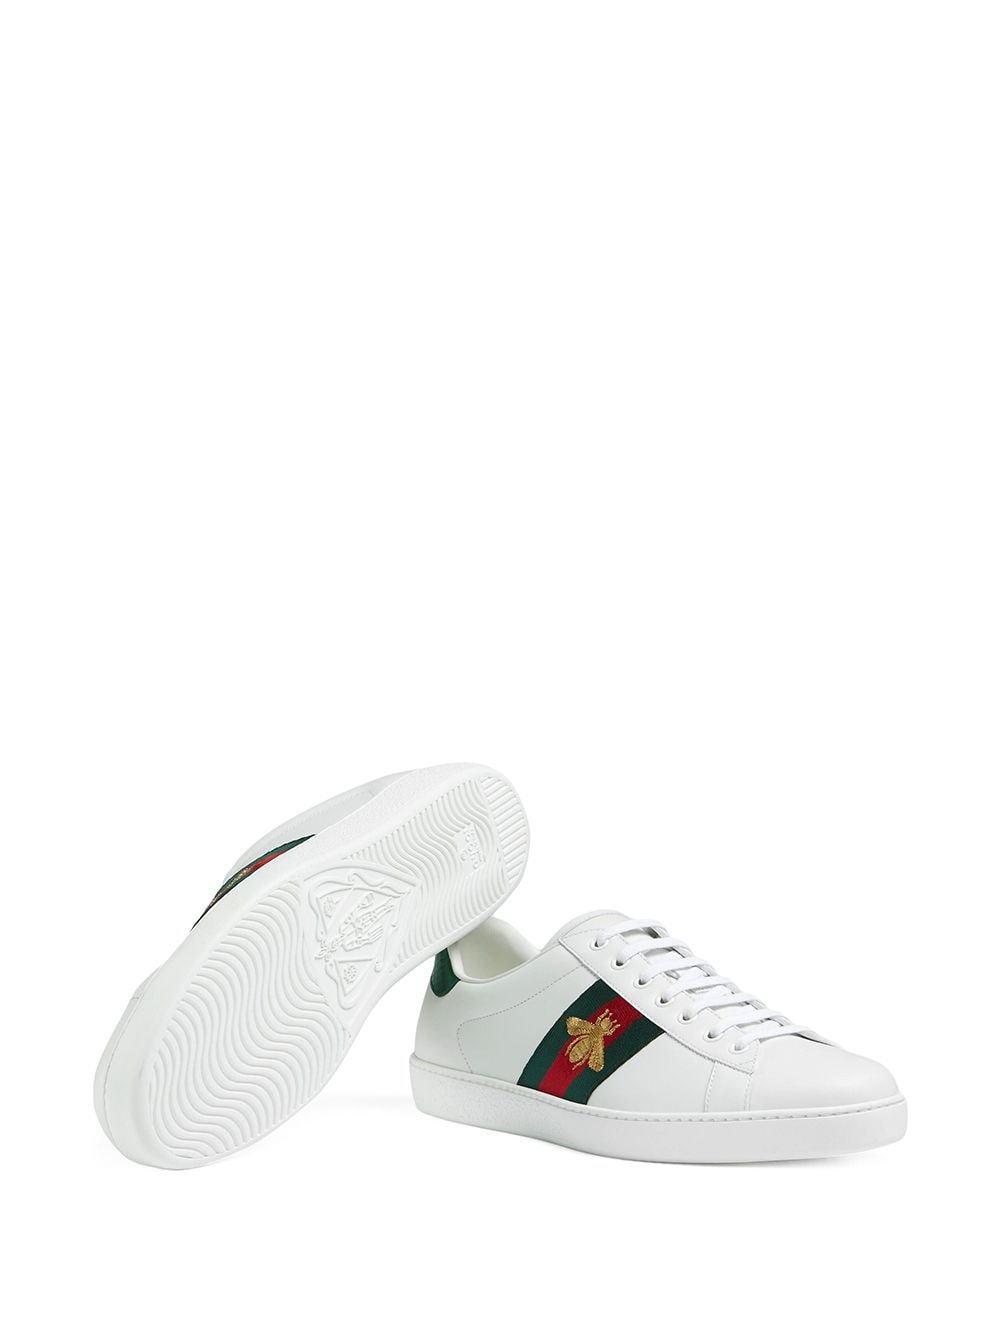 GUCCI White Multicolor Leather Sneakers for Men